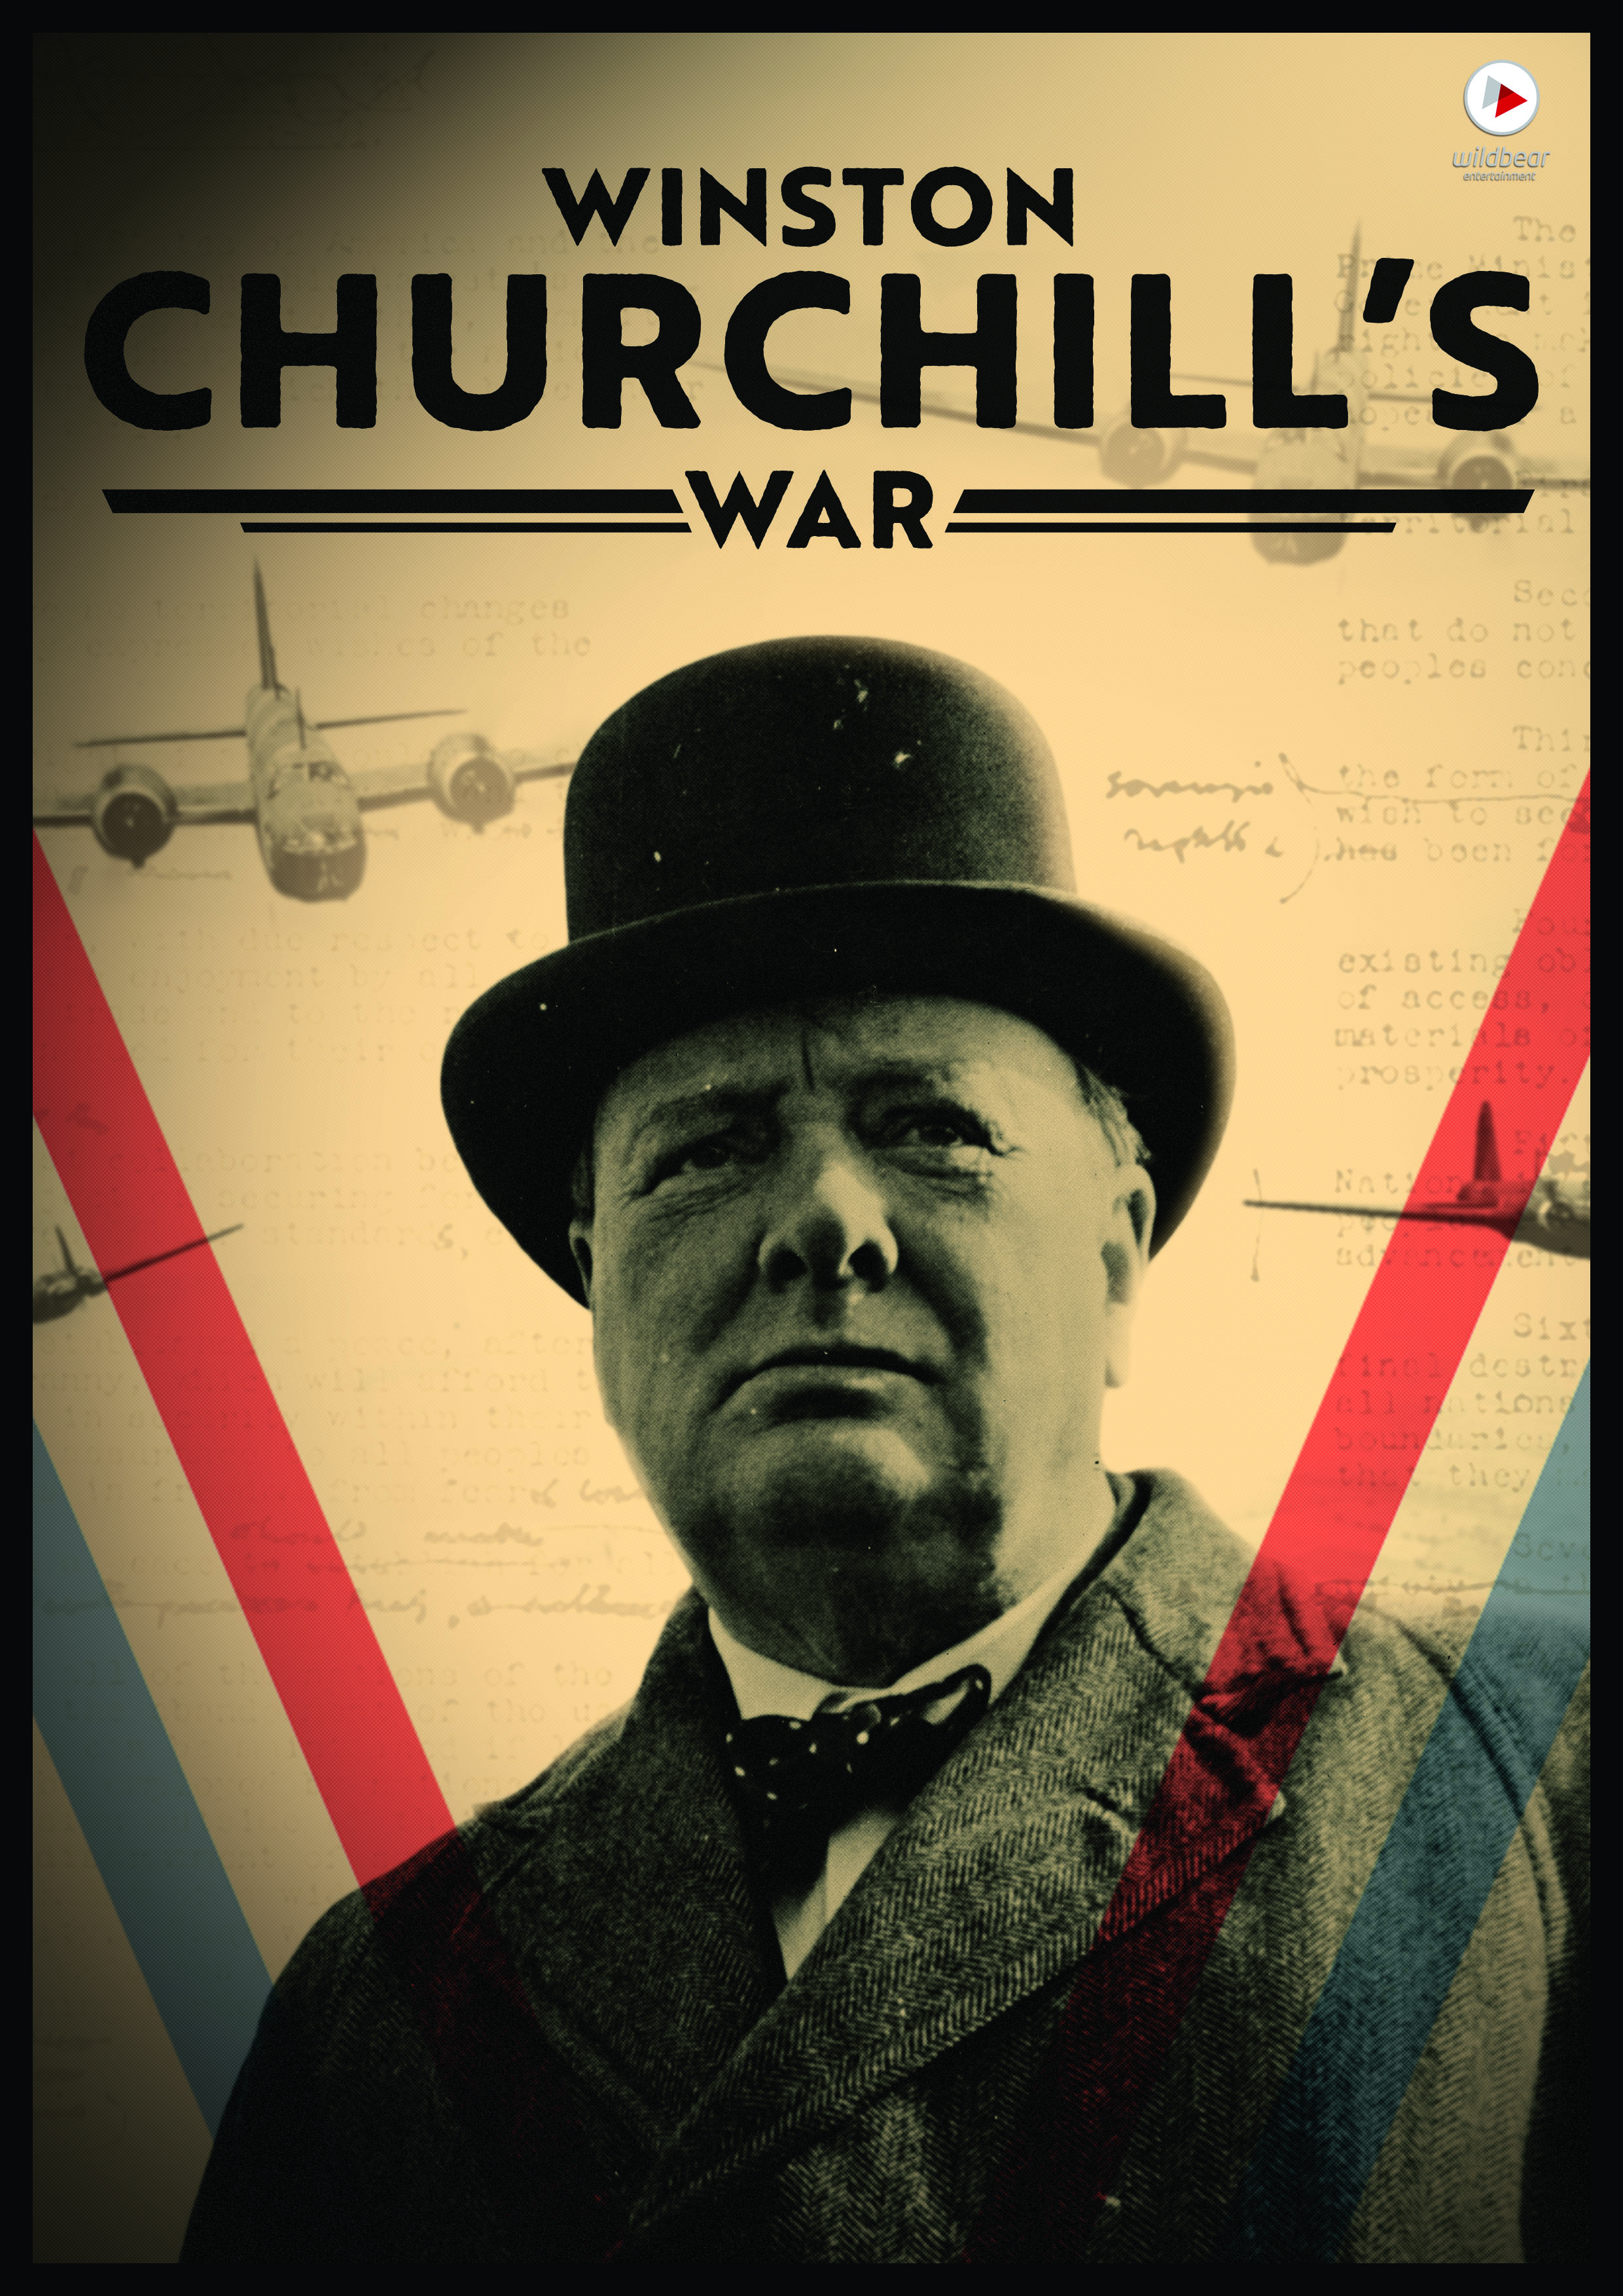 Winston Churchill's War